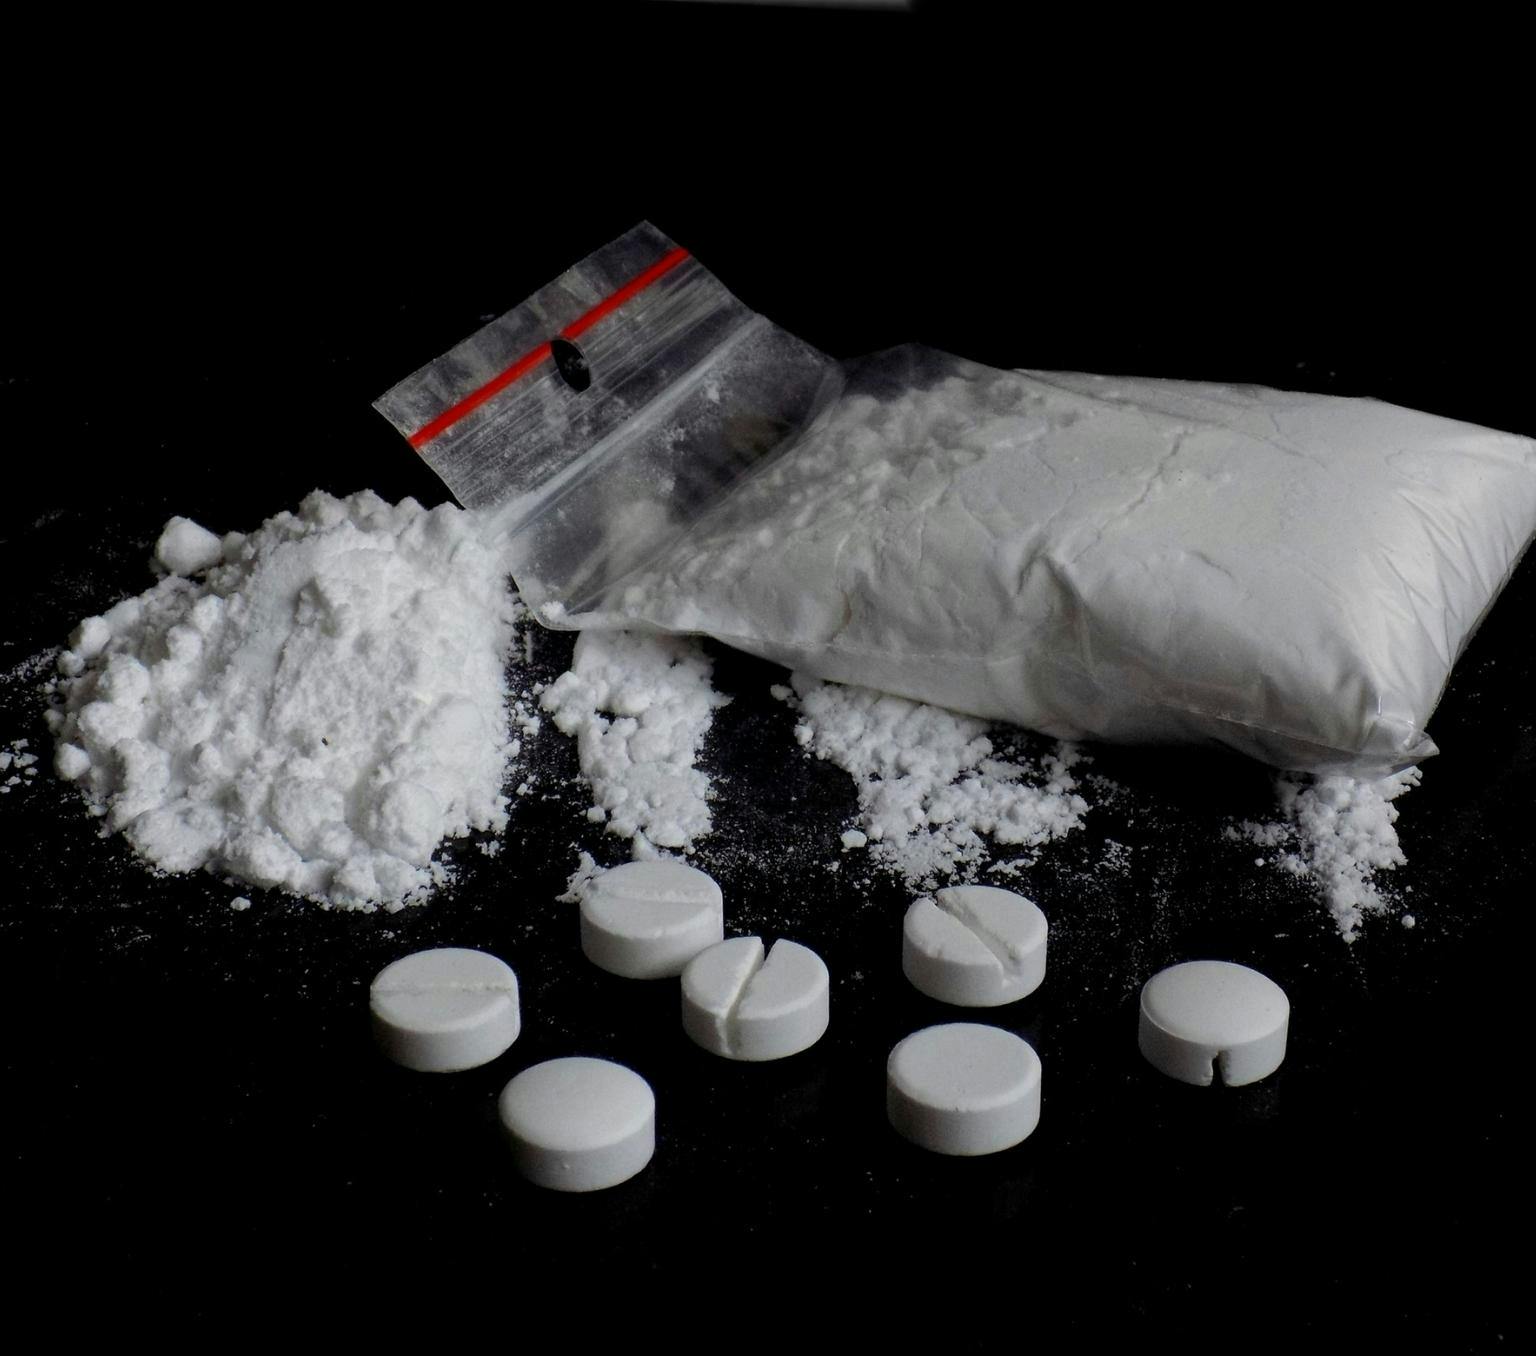 White pills, white powder and a small ziplock bag of white powder on a black background.